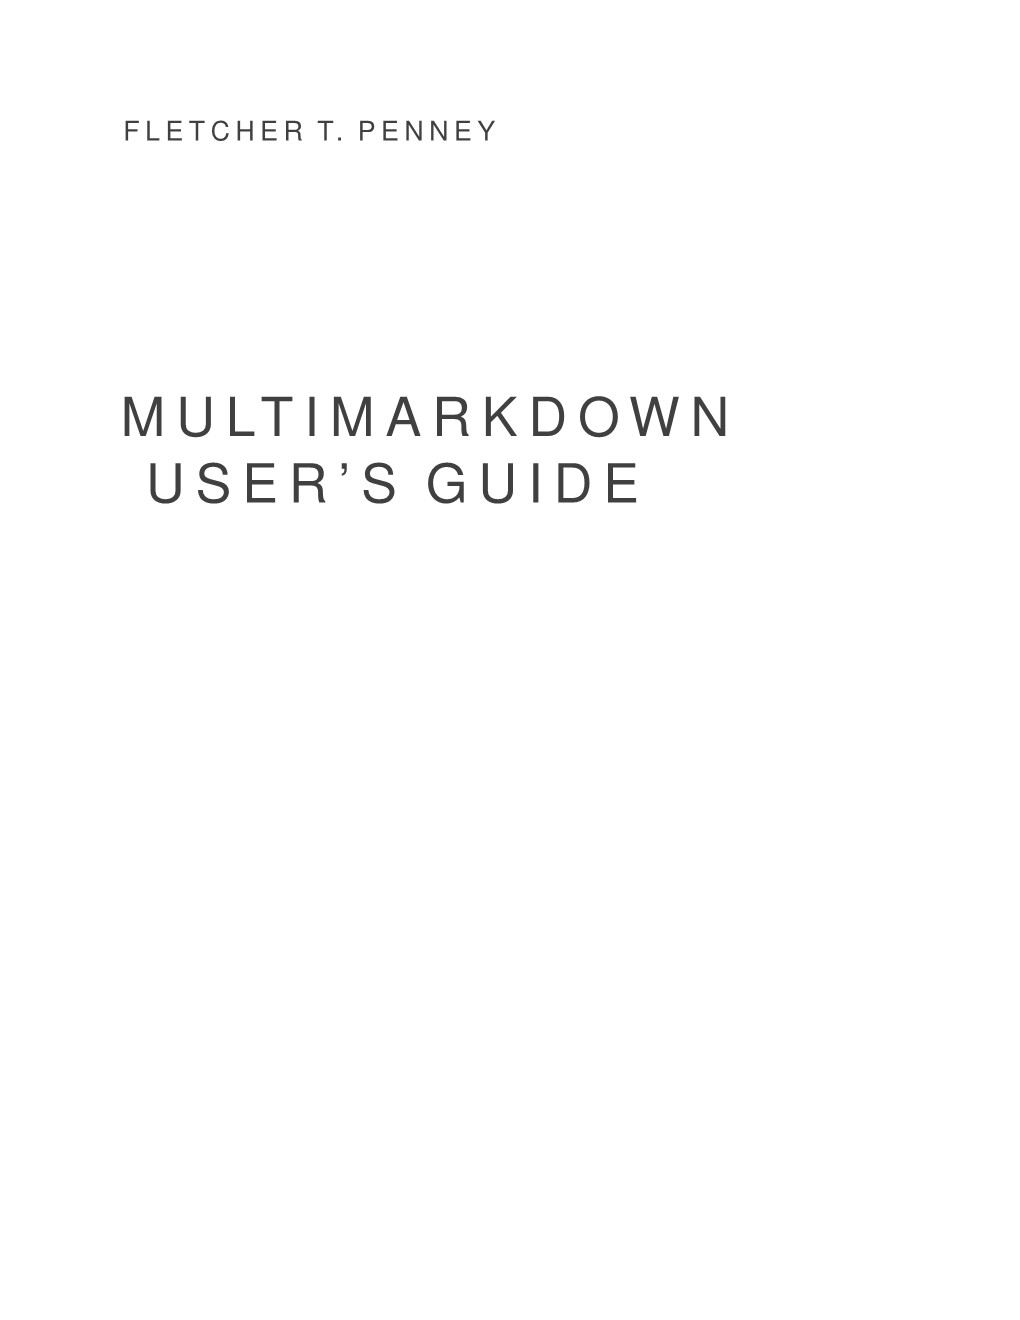 Multimarkdown User's Guide